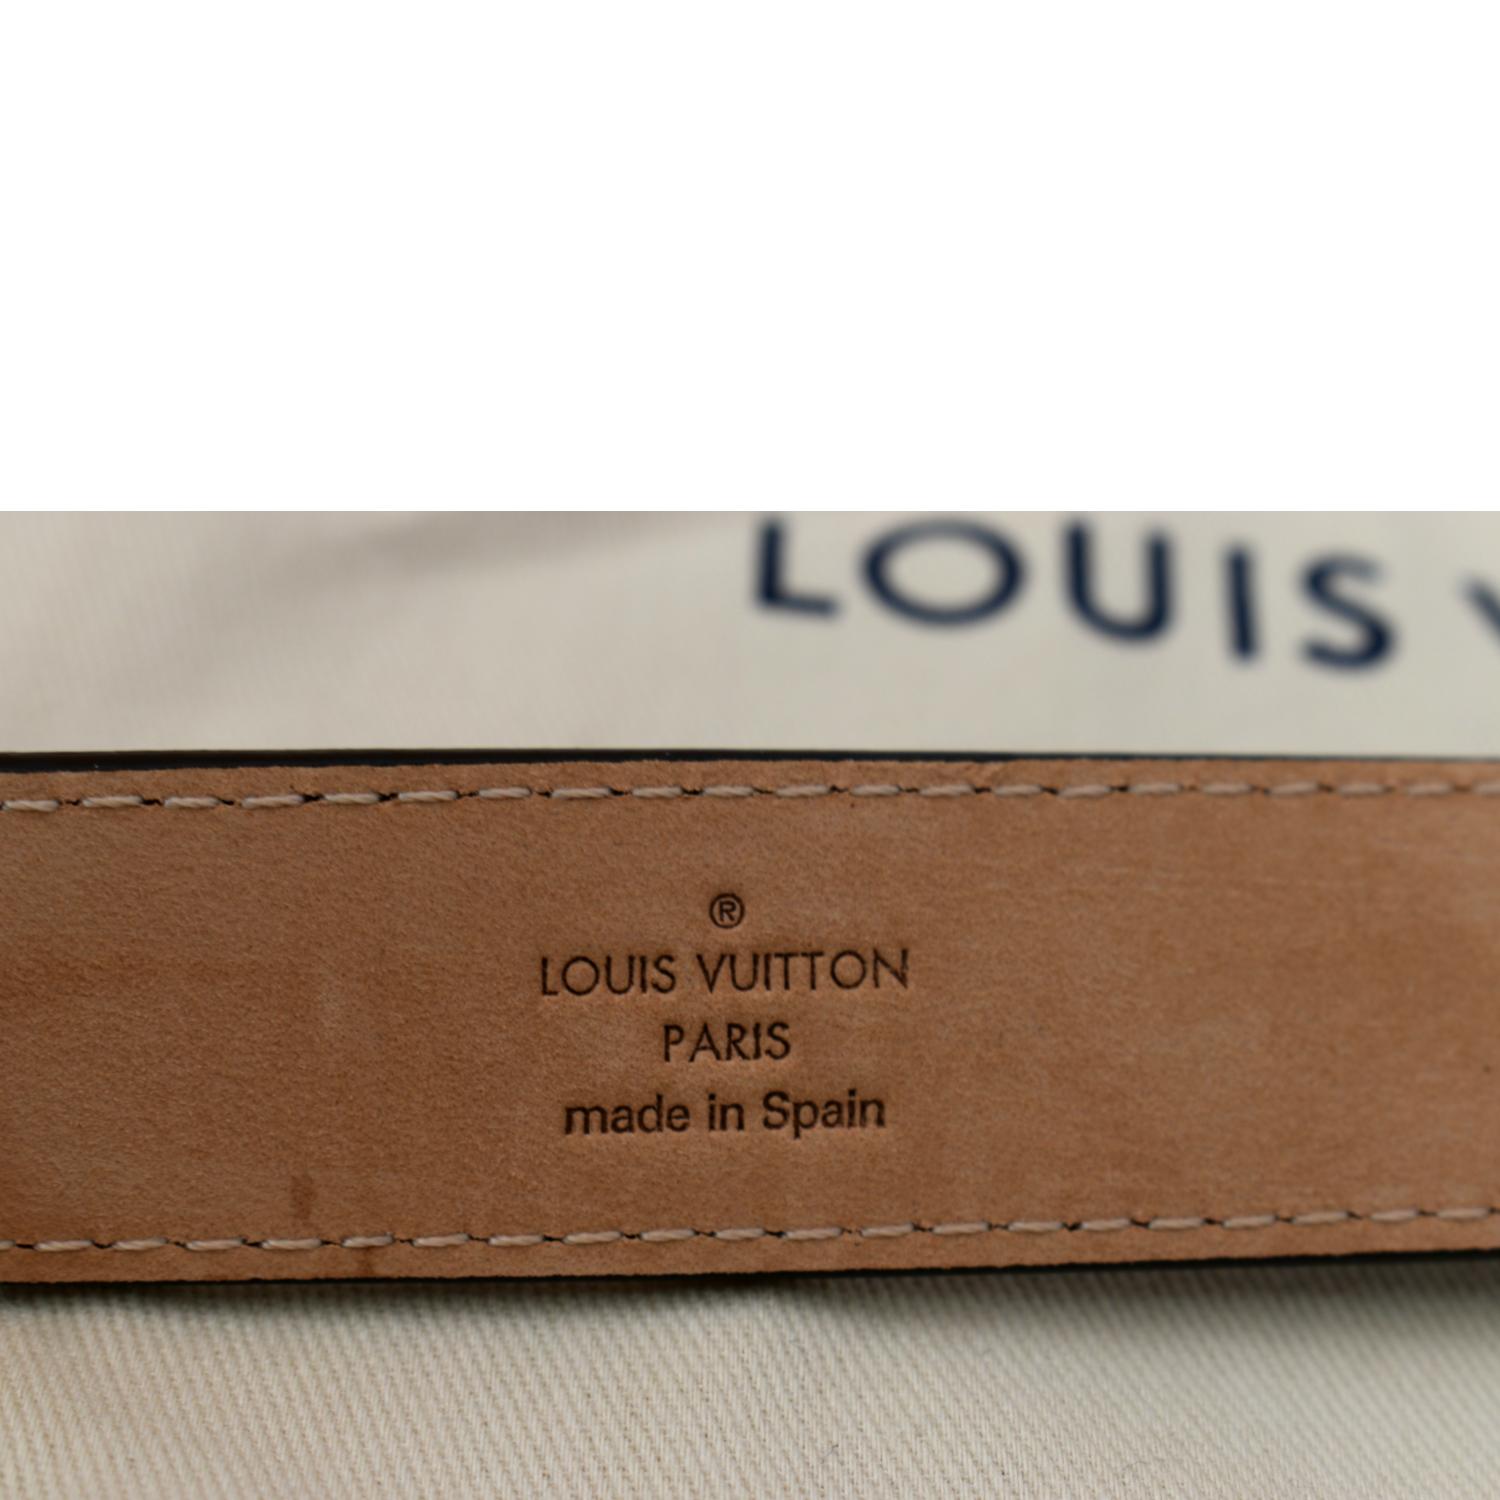 Cool new belt : r/Louisvuitton